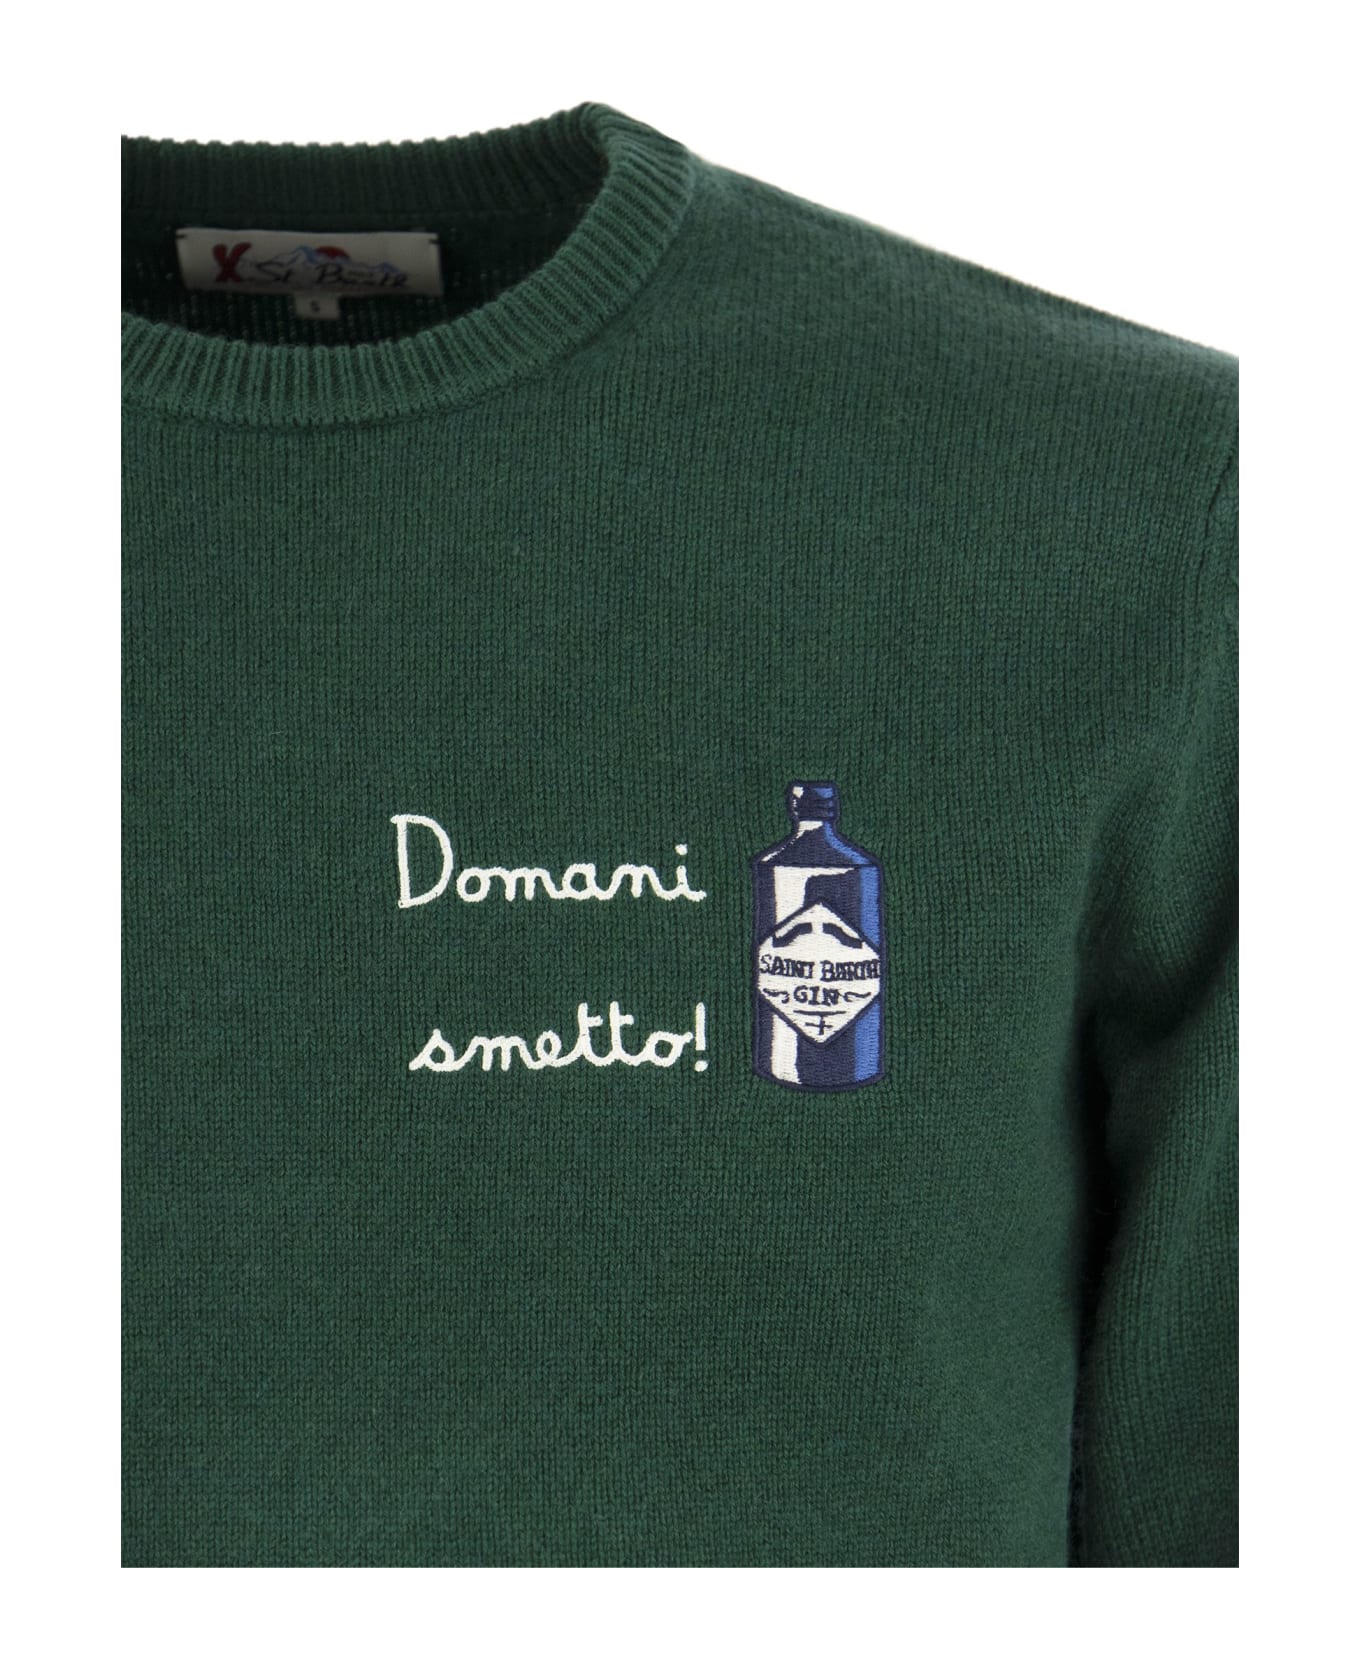 MC2 Saint Barth Wool And Cashmere Blend Jumper Domani Smetto - Green ニットウェア